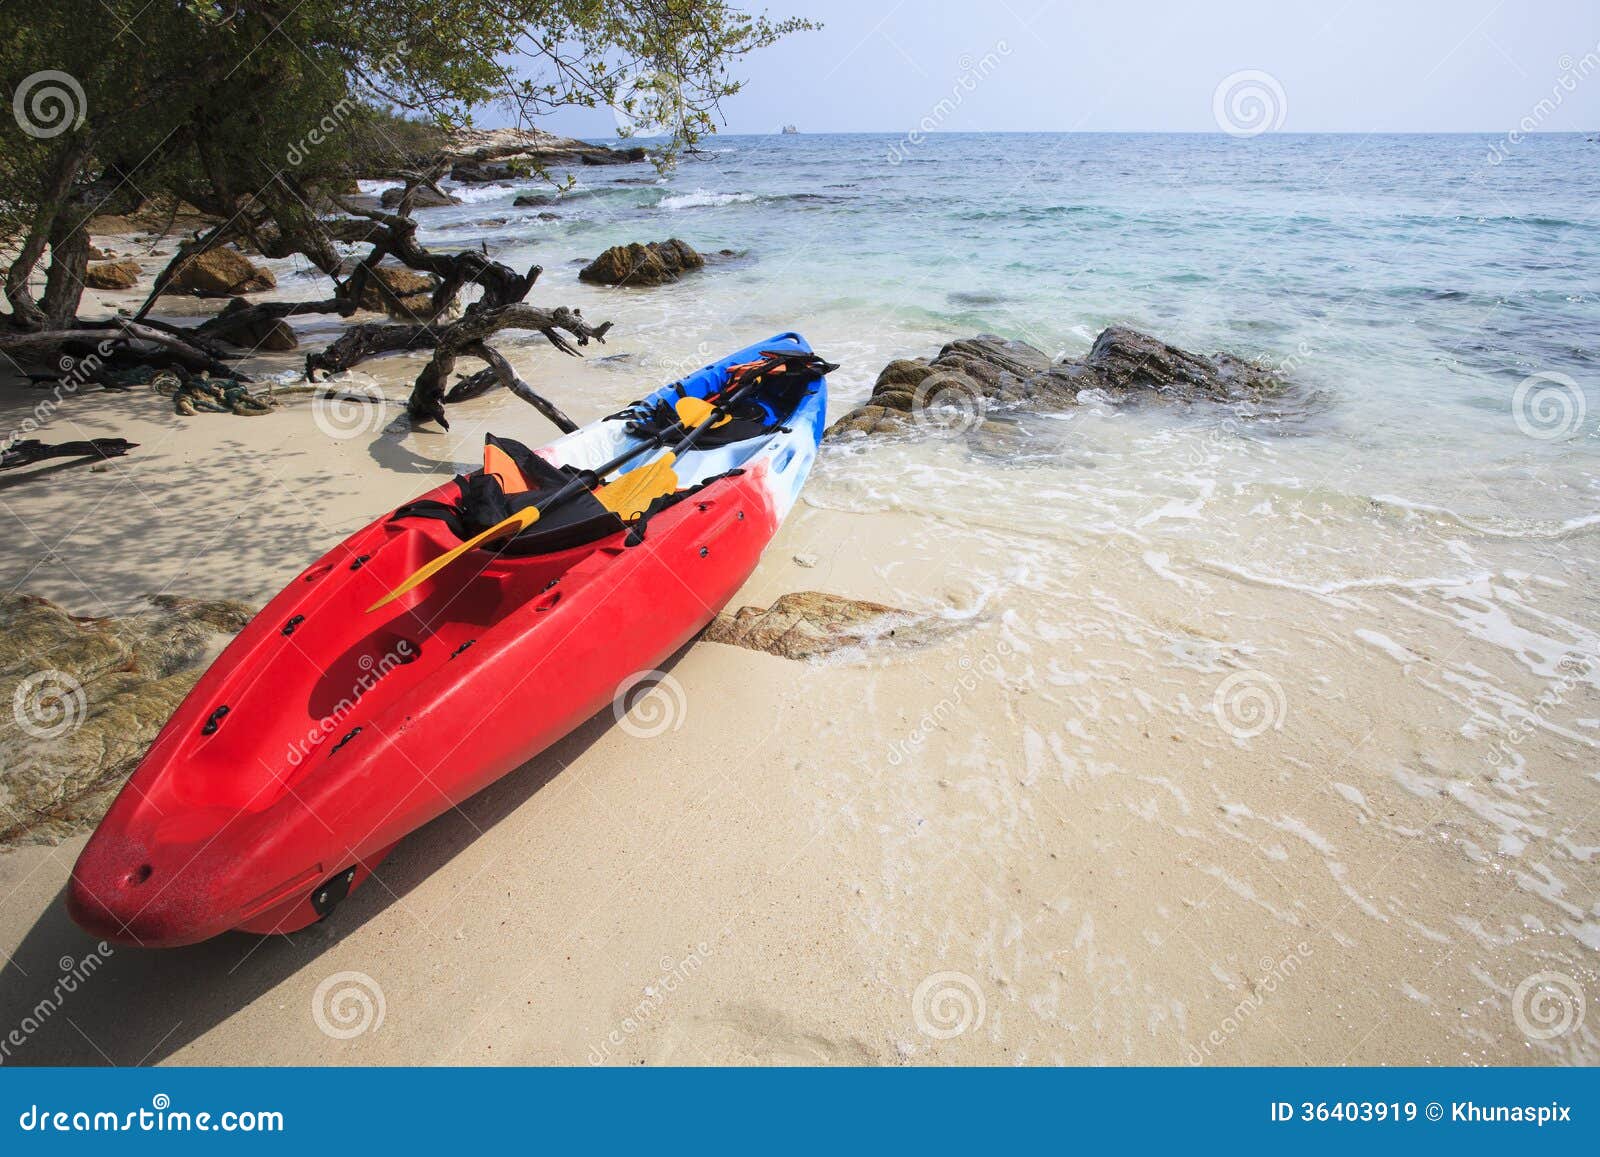 Sea Kayak Canoe On Sea Sand Beach With Beautiful Nature 